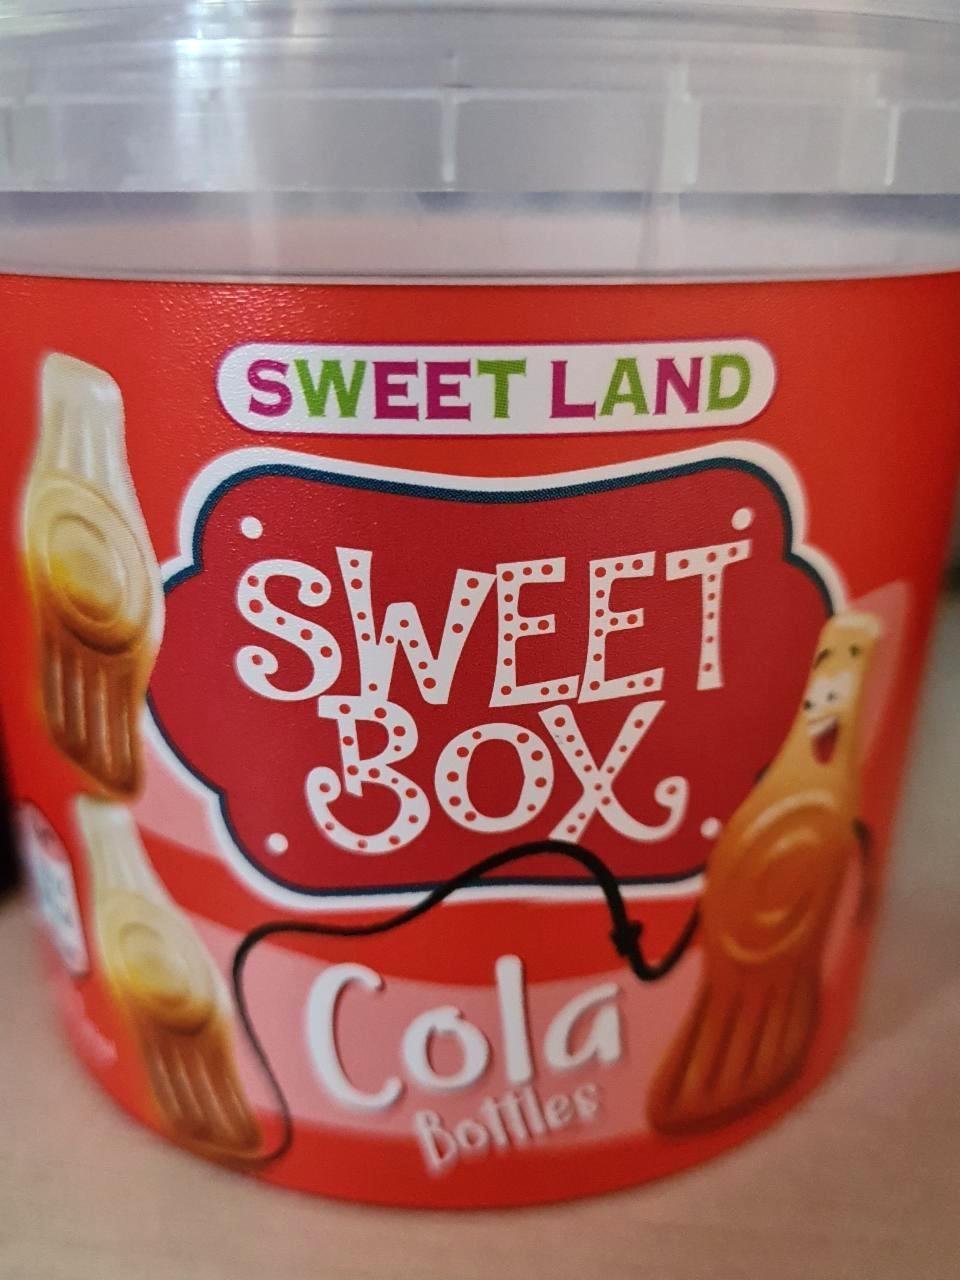 Képek - Sweet box cola Sweet land